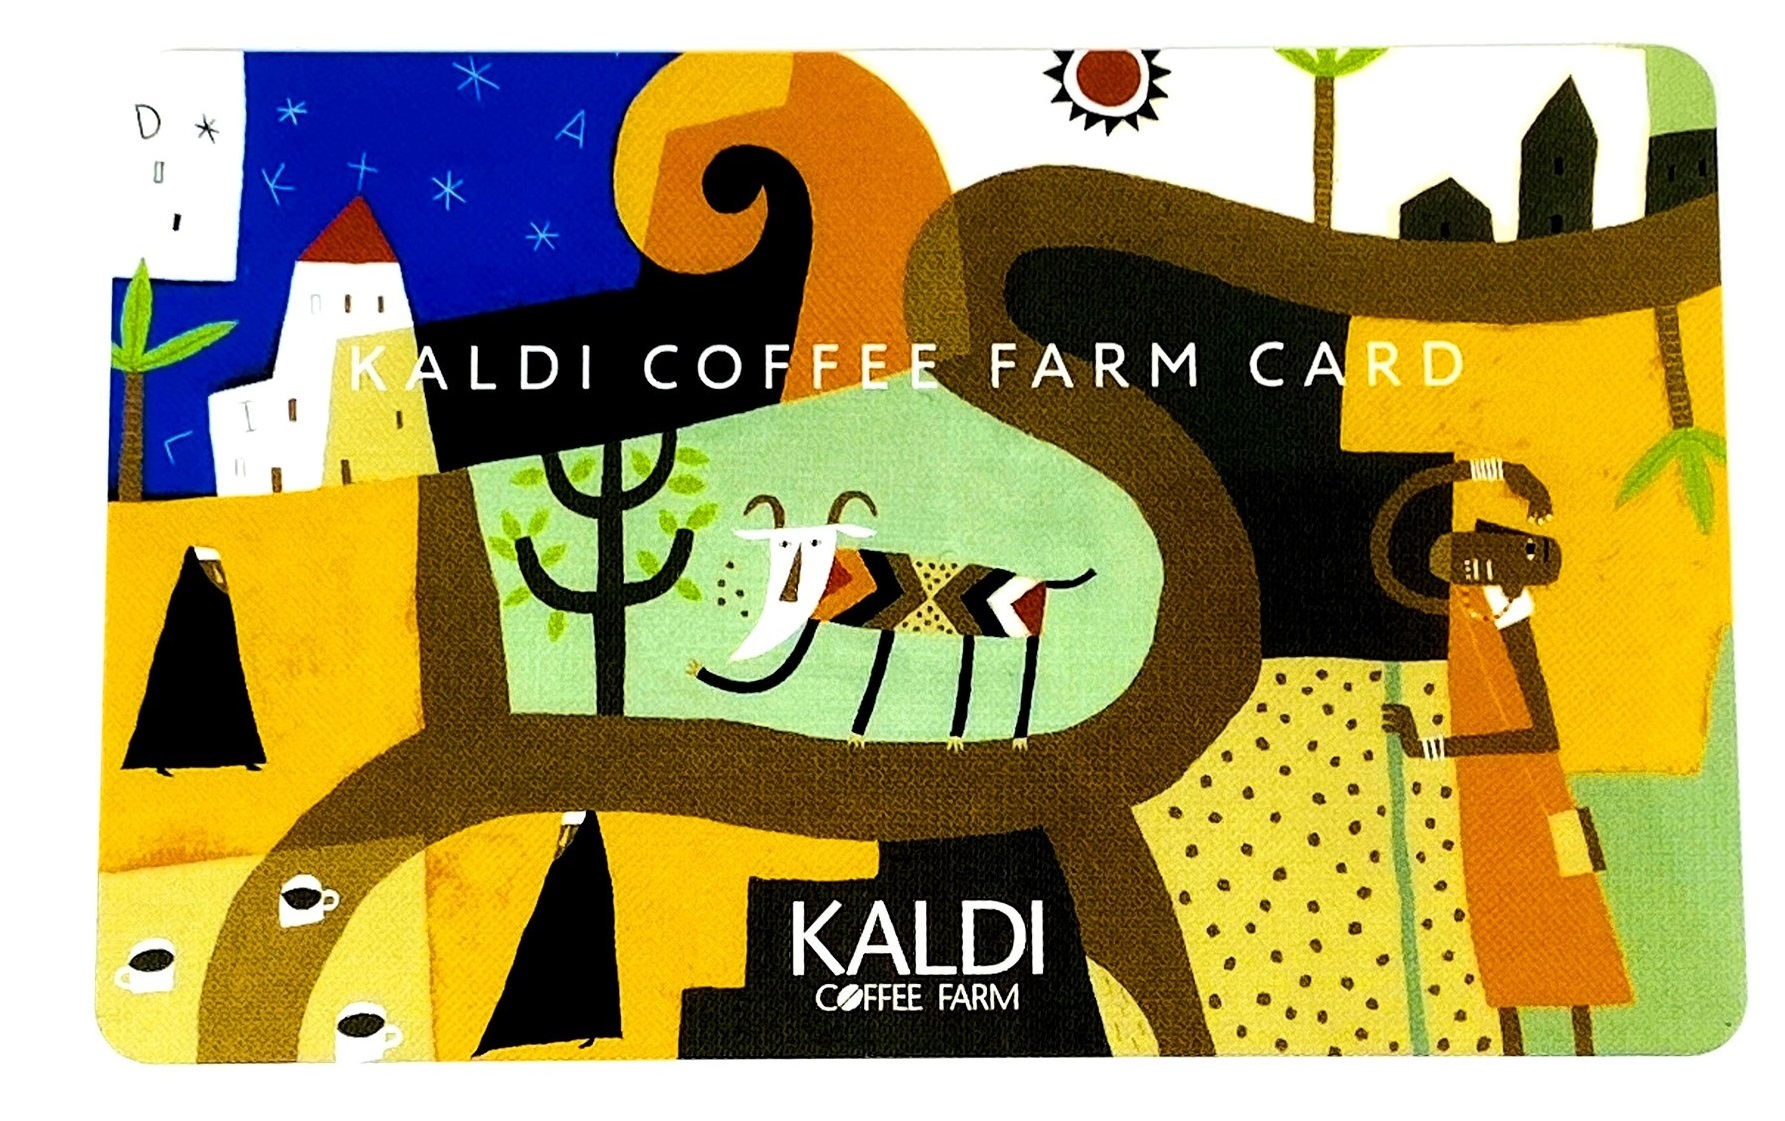 KALDI COFFEE FARM CARD